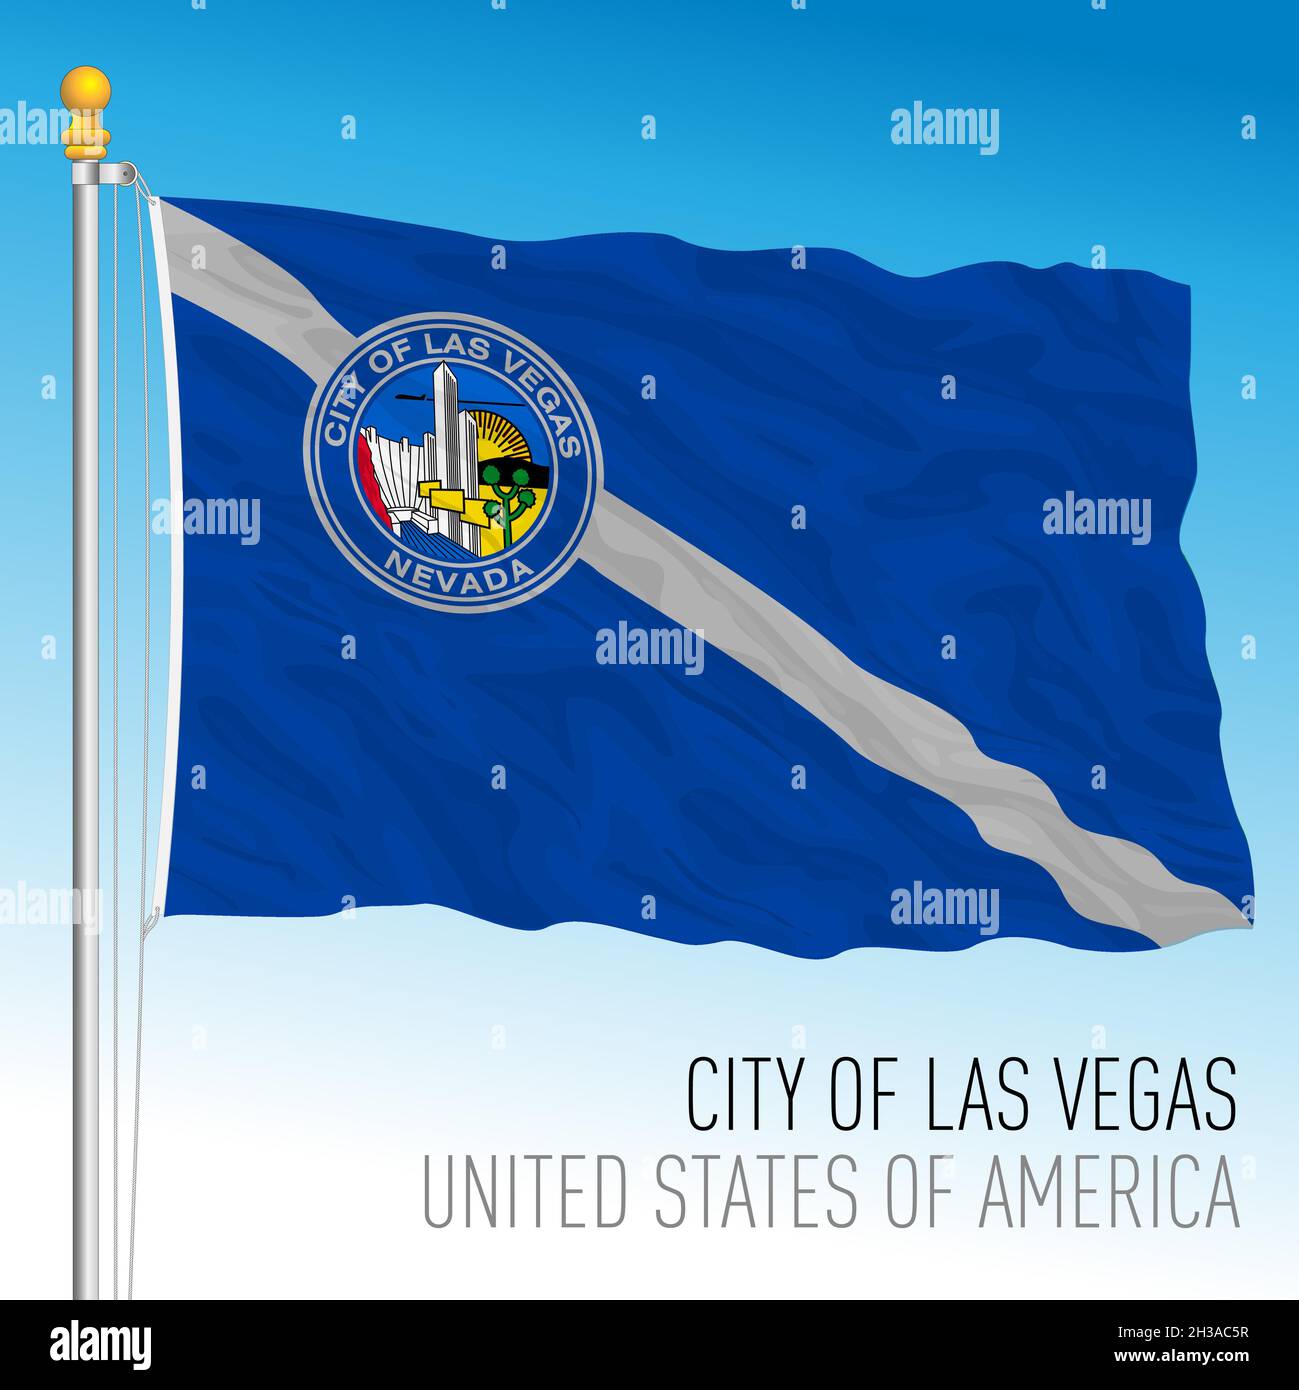 City of Las Vegas flag, Nevada, United States, vector illustration